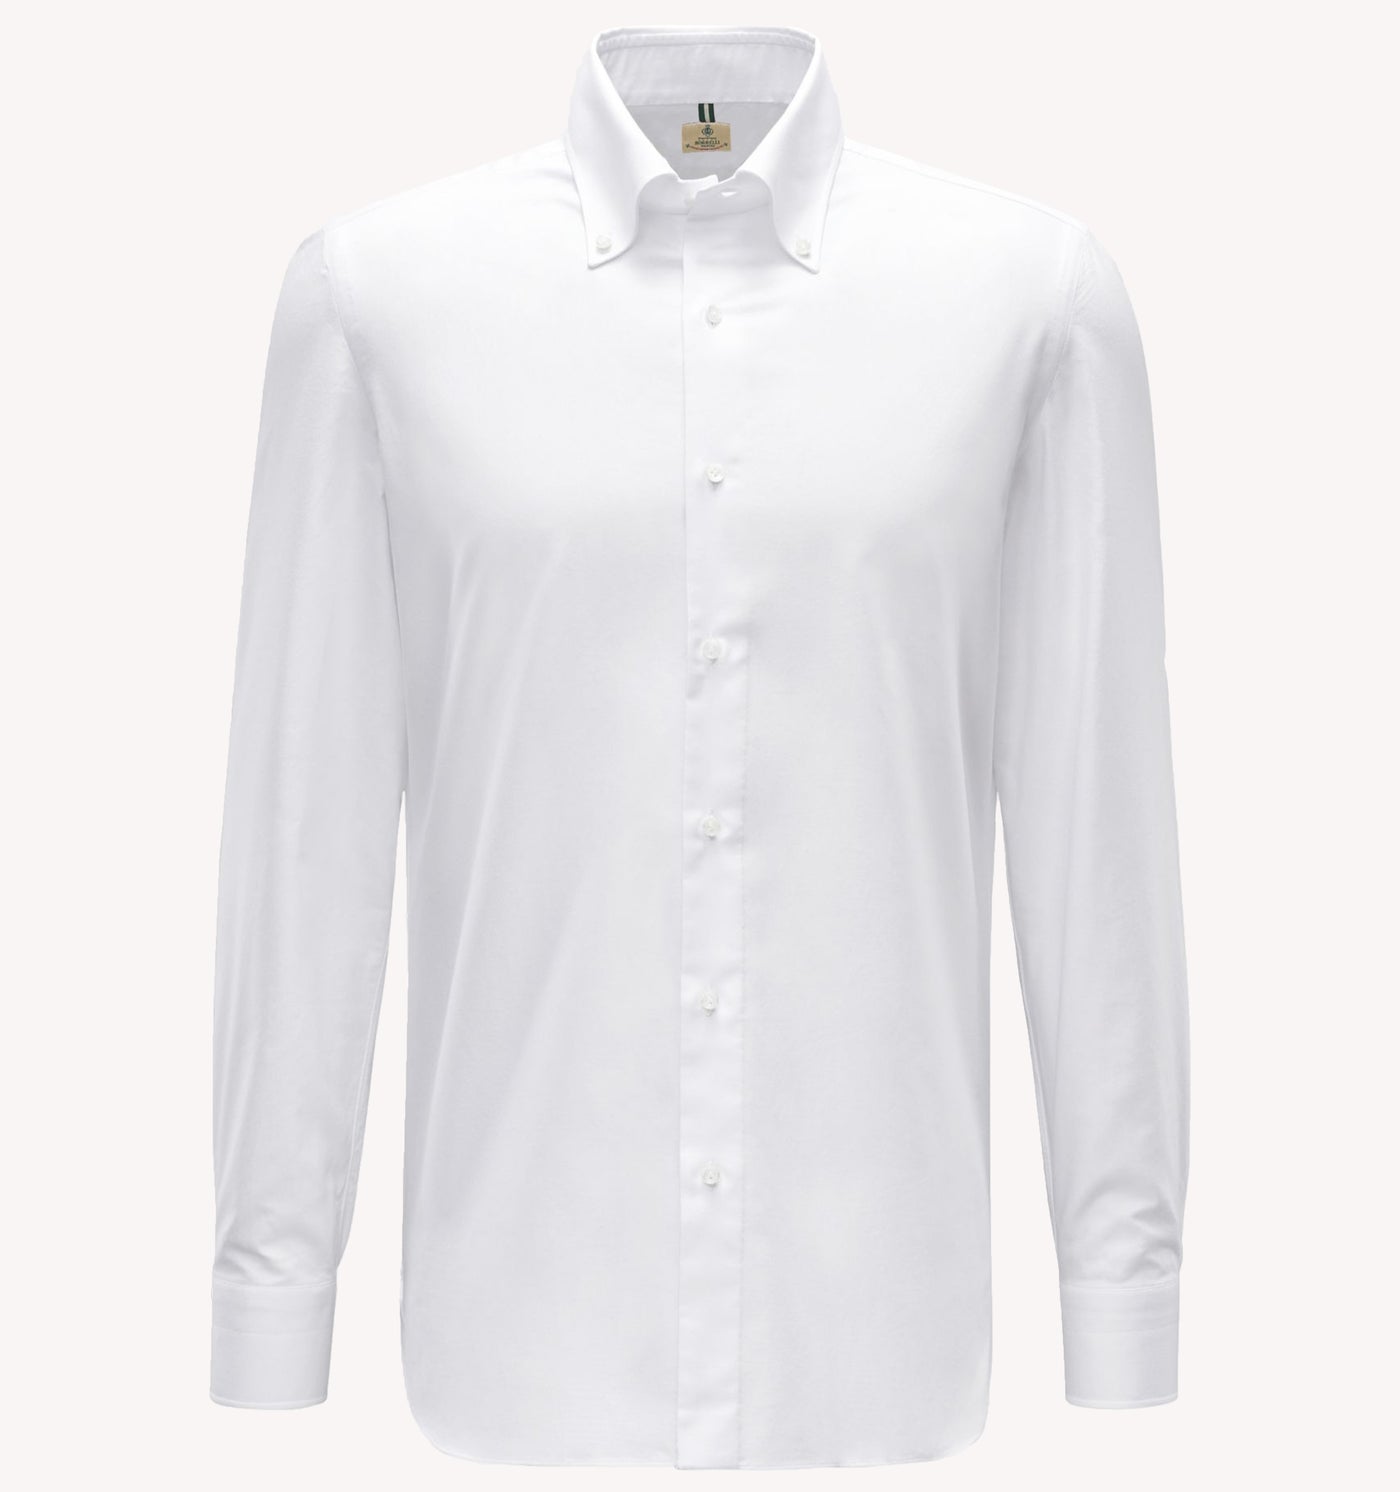 Borrelli Classic Dress Shirt in White